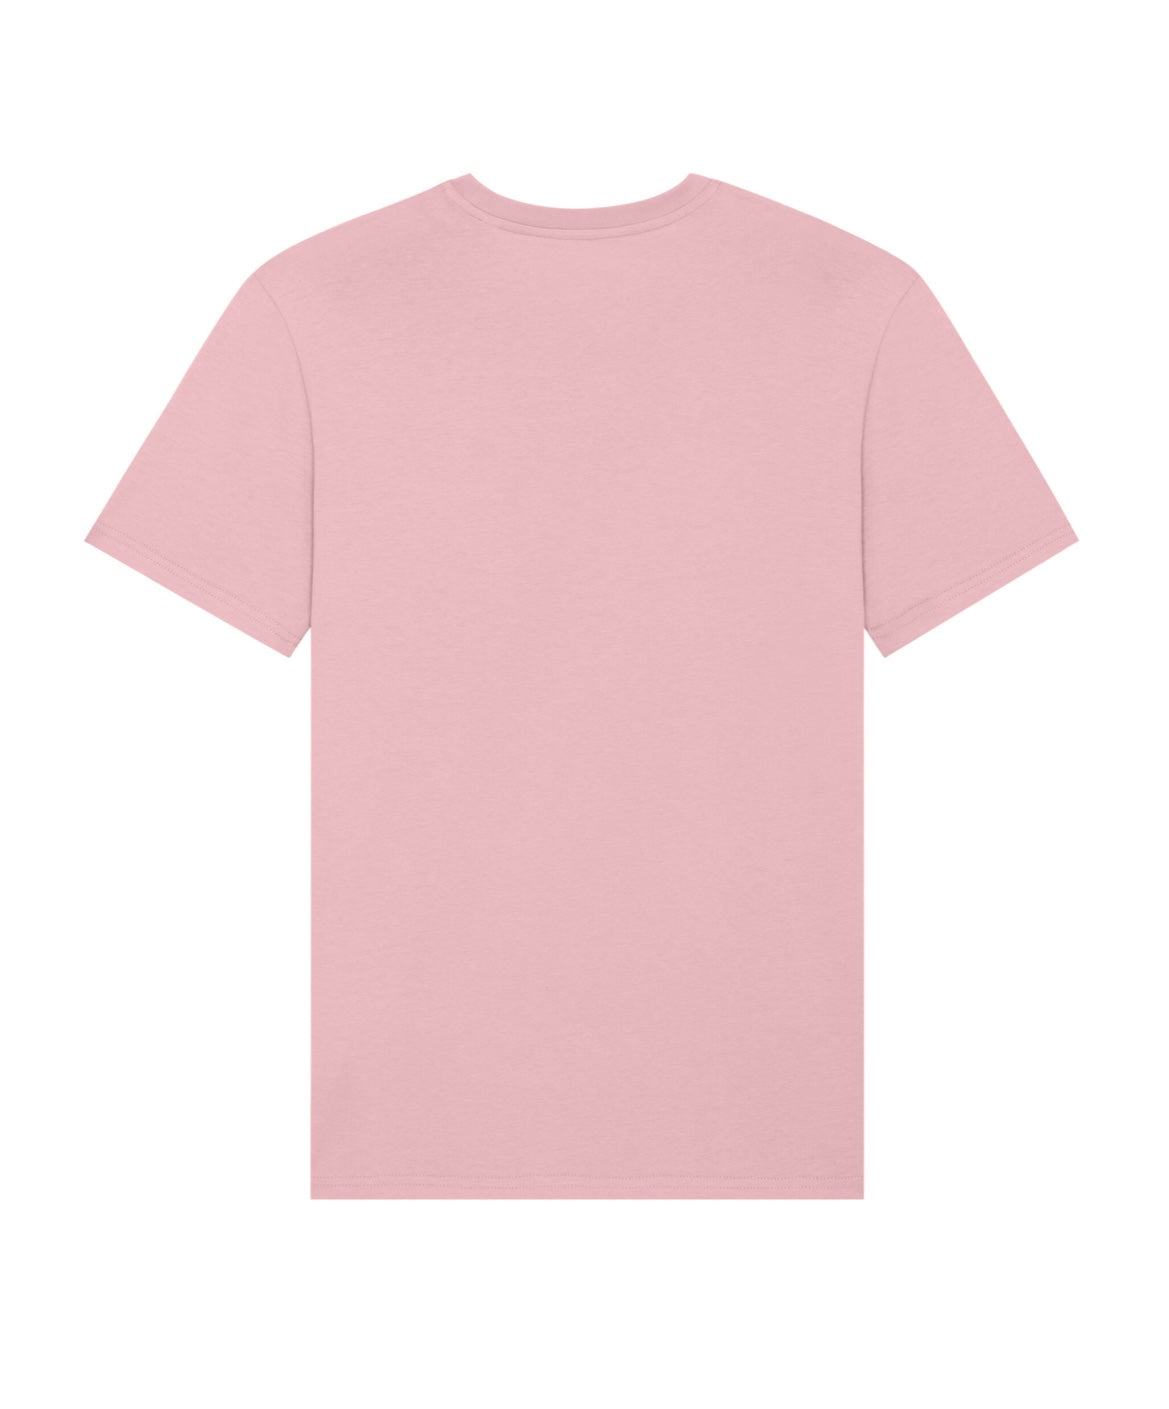 Baron filou organic t-shirt filou LXXIX - rose parfait